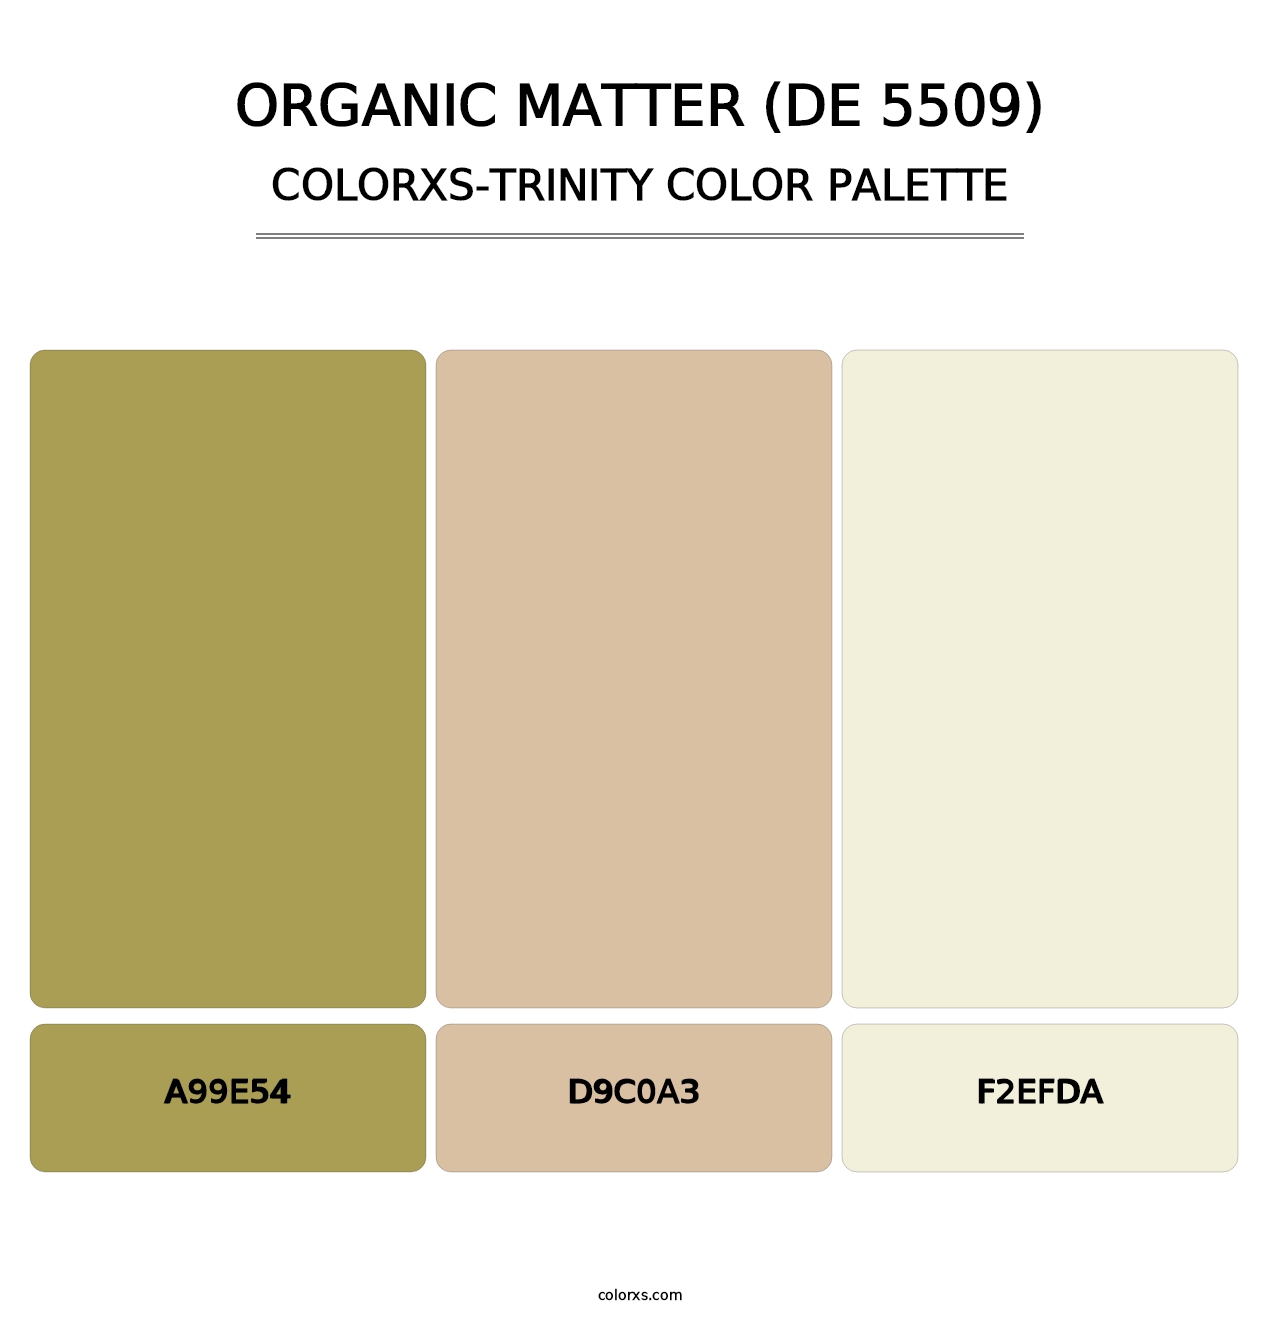 Organic Matter (DE 5509) - Colorxs Trinity Palette